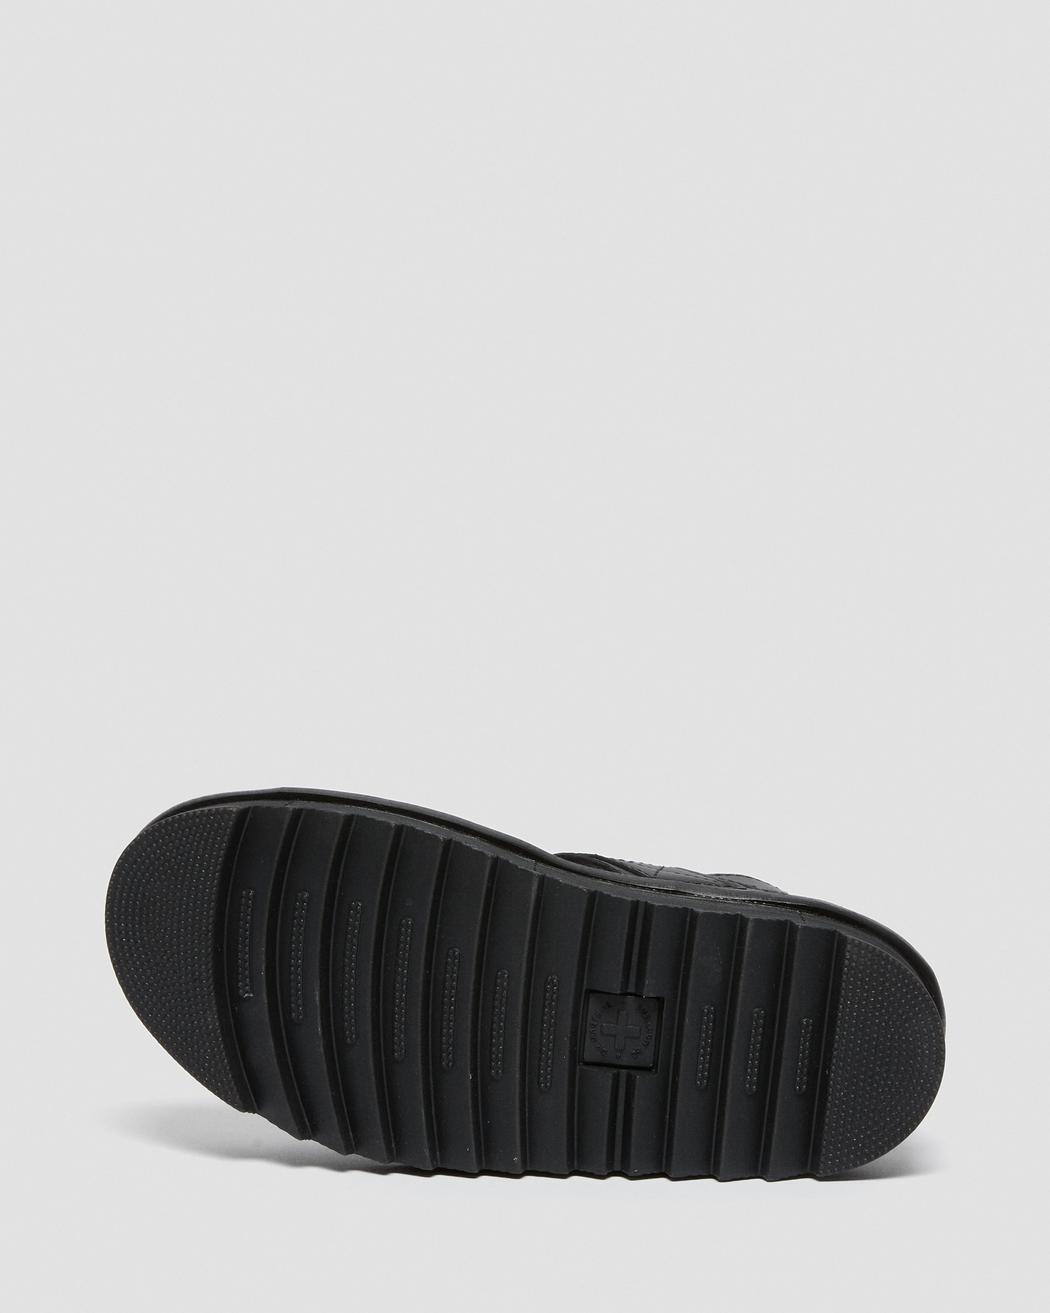 Dr. Martens Voss Black Hydro Leather Sandals 23802001